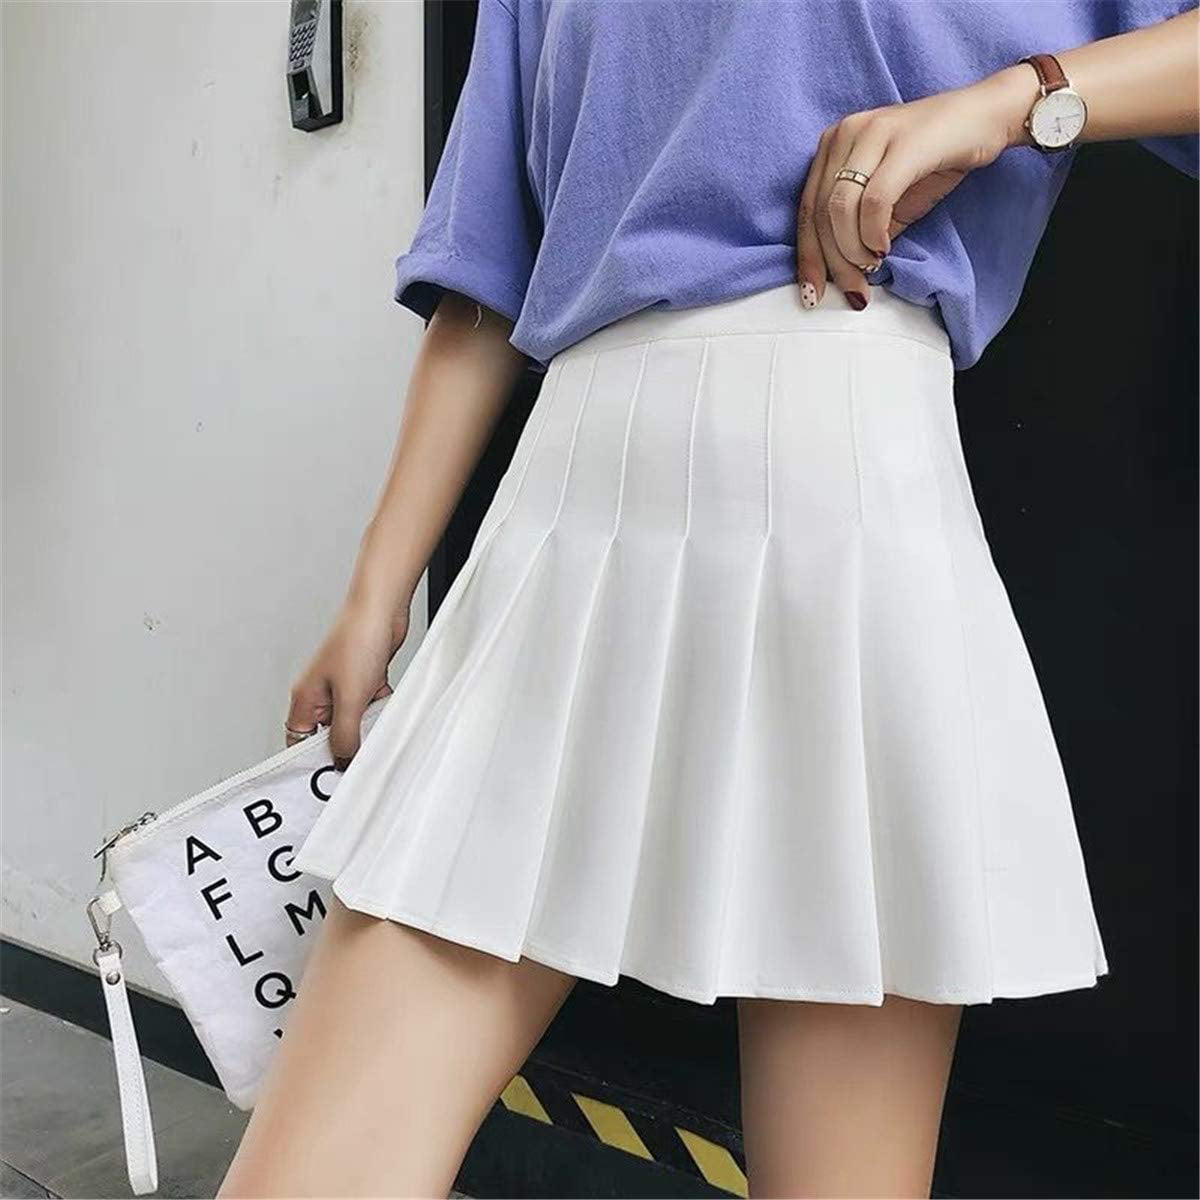 Pleated Mini Skirts for Women Teen Girls High Waisted Tennis Skirt Cute Summer Skater Skorts with Short 